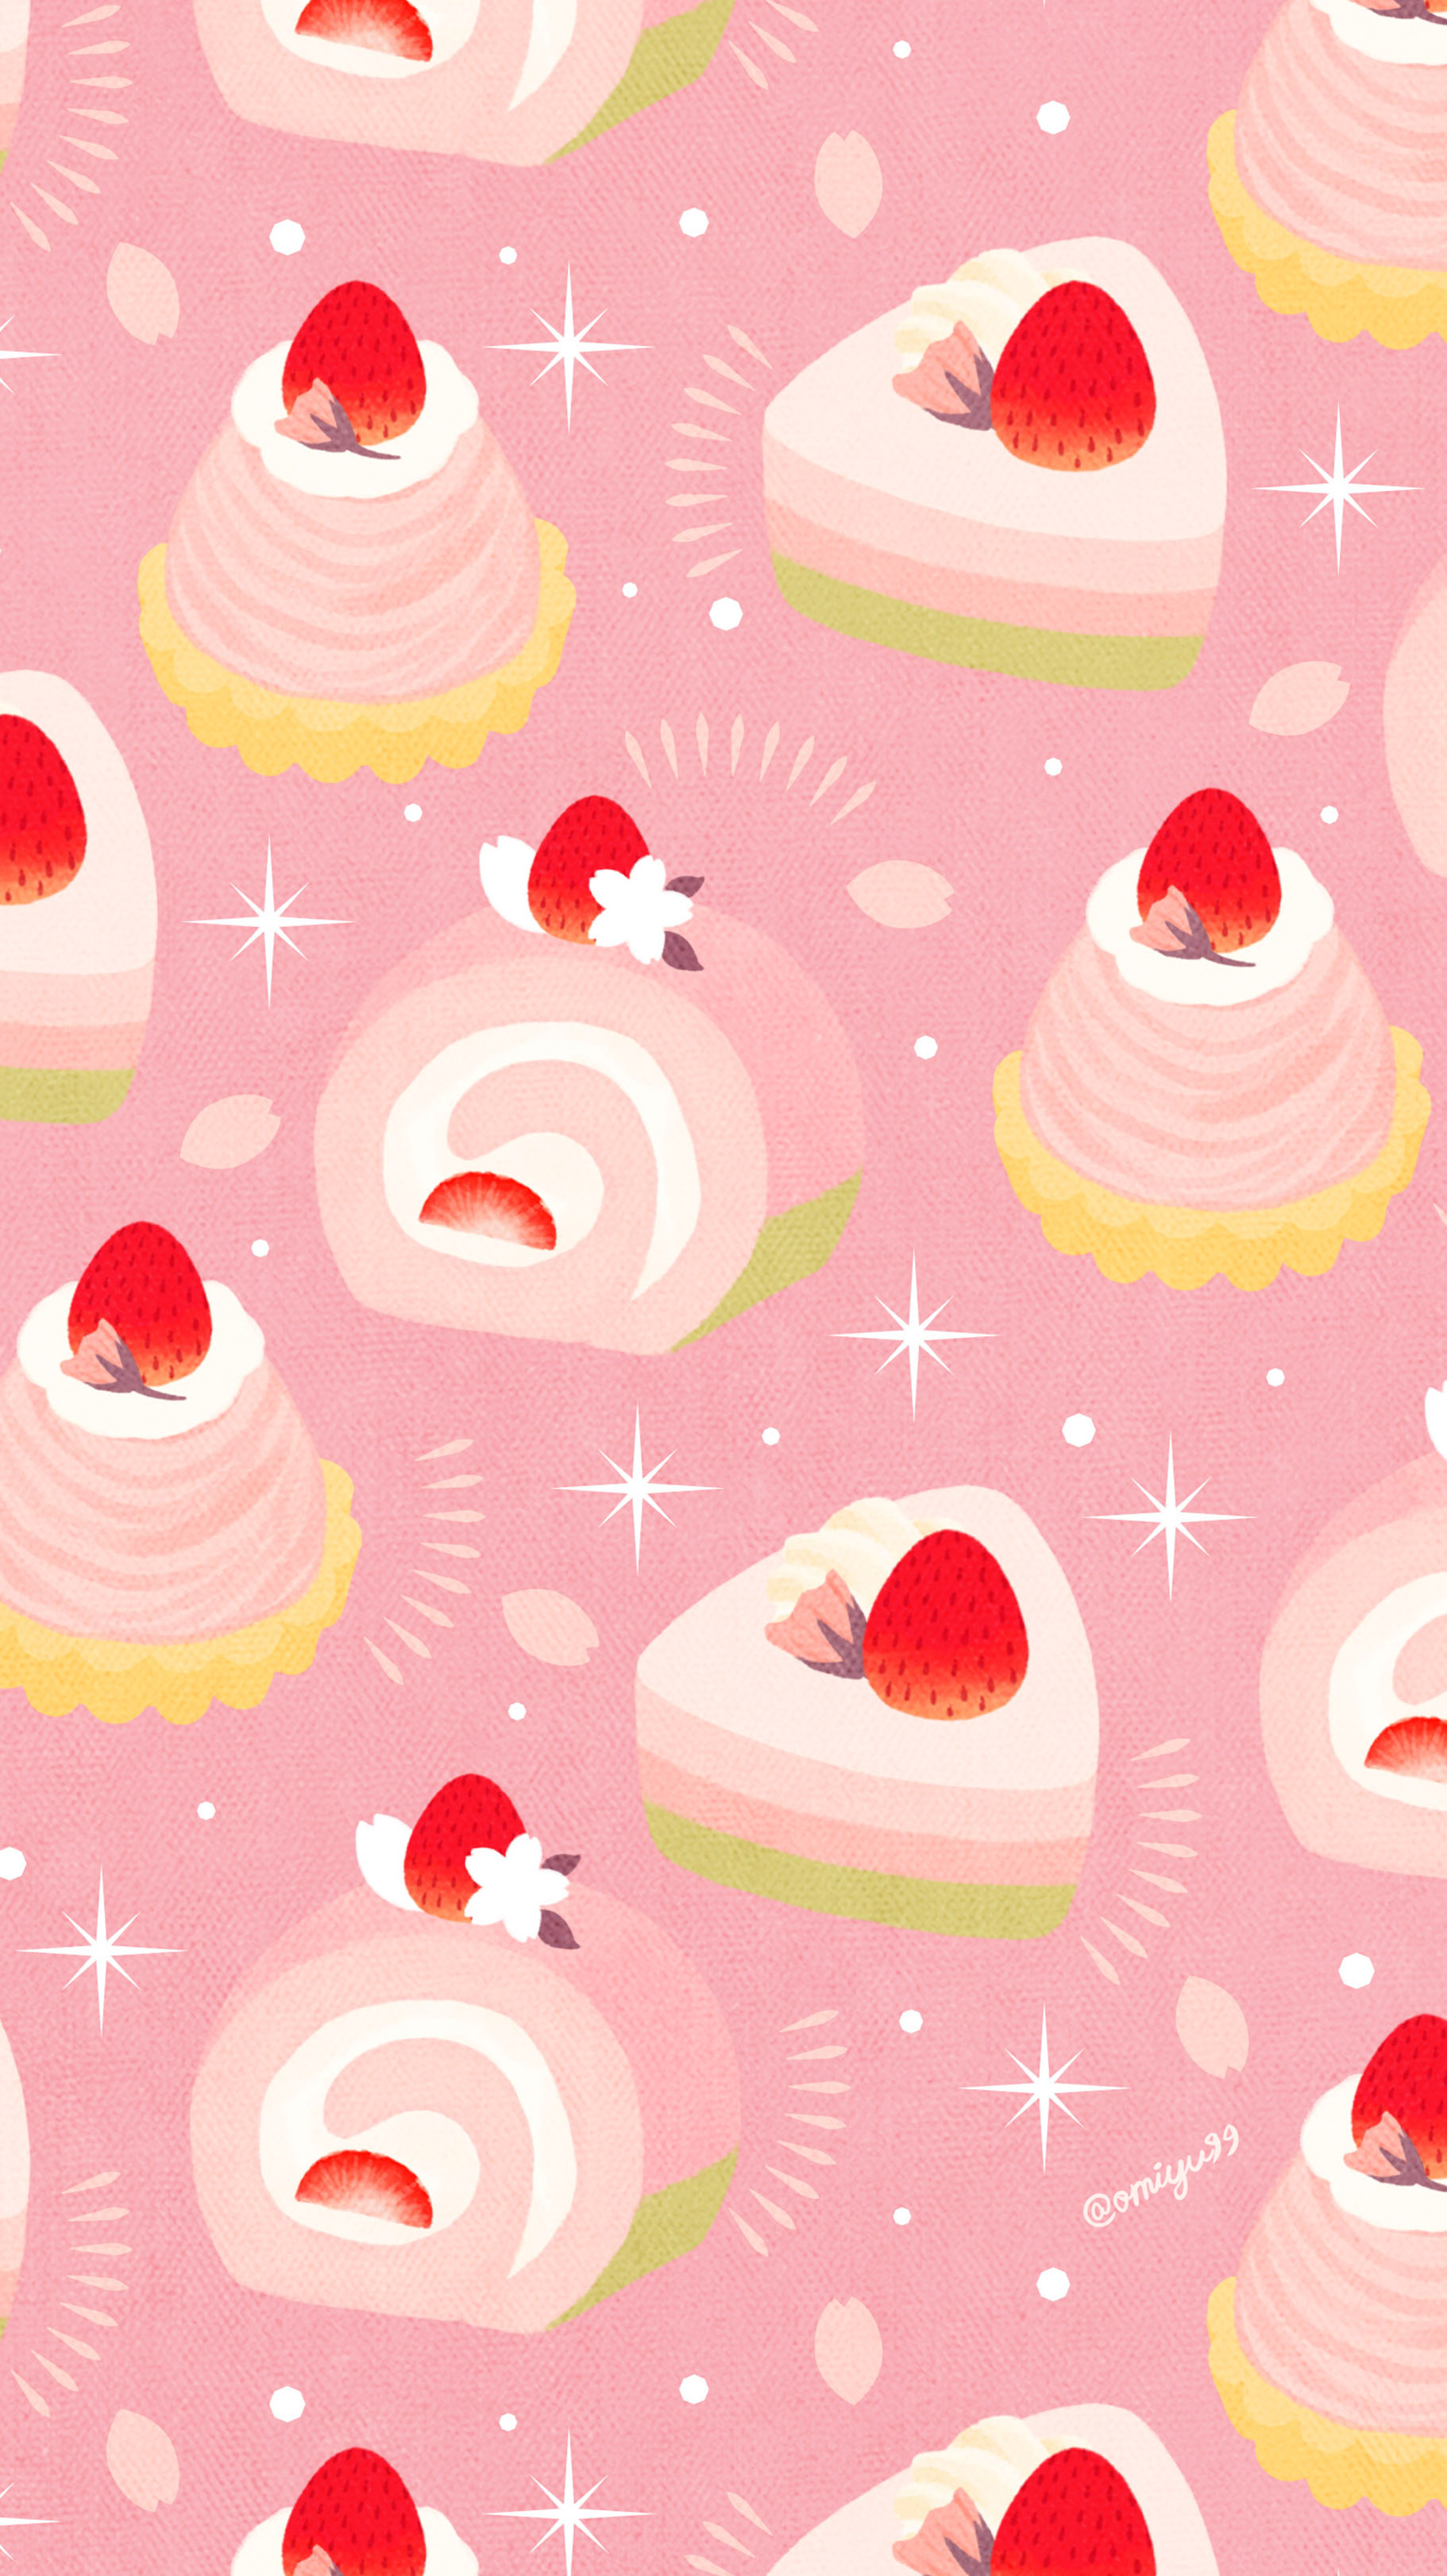 Omiyu さくらケーキな壁紙 Illust Illustration 壁紙 イラスト Iphone壁紙 ケーキ さくら 食べ物 Strawberry Cake T Co Ztuorieocr Twitter